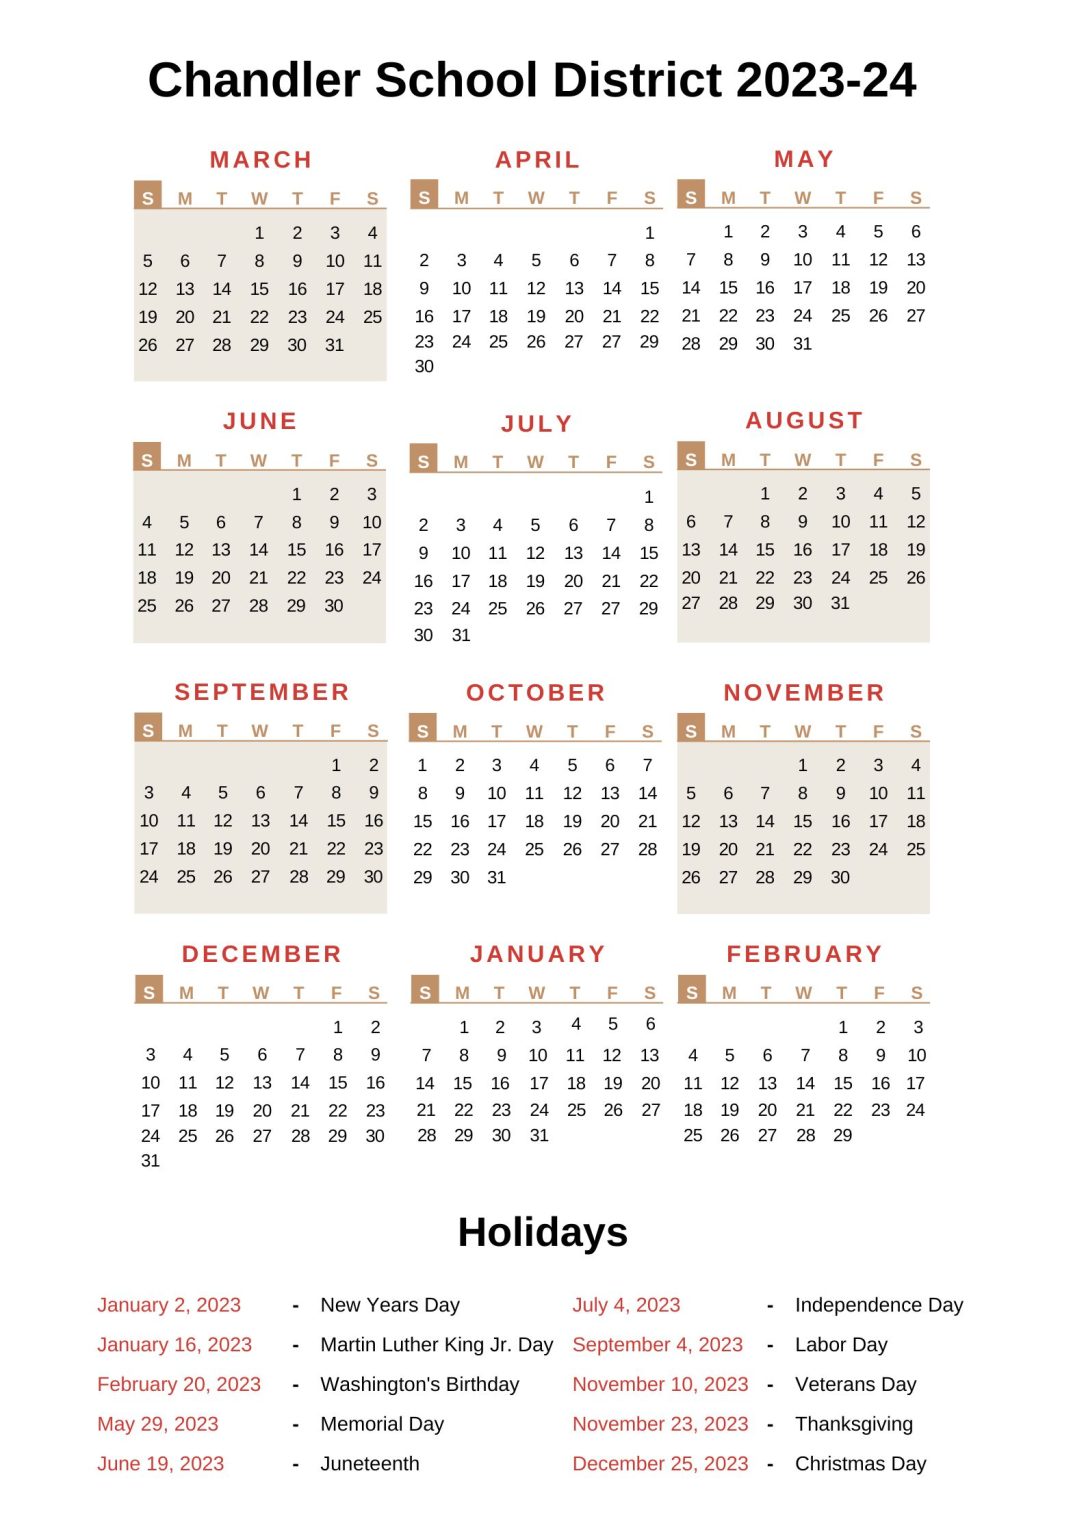 Chandler School District Calendar CSD 2023 24 With Holidays